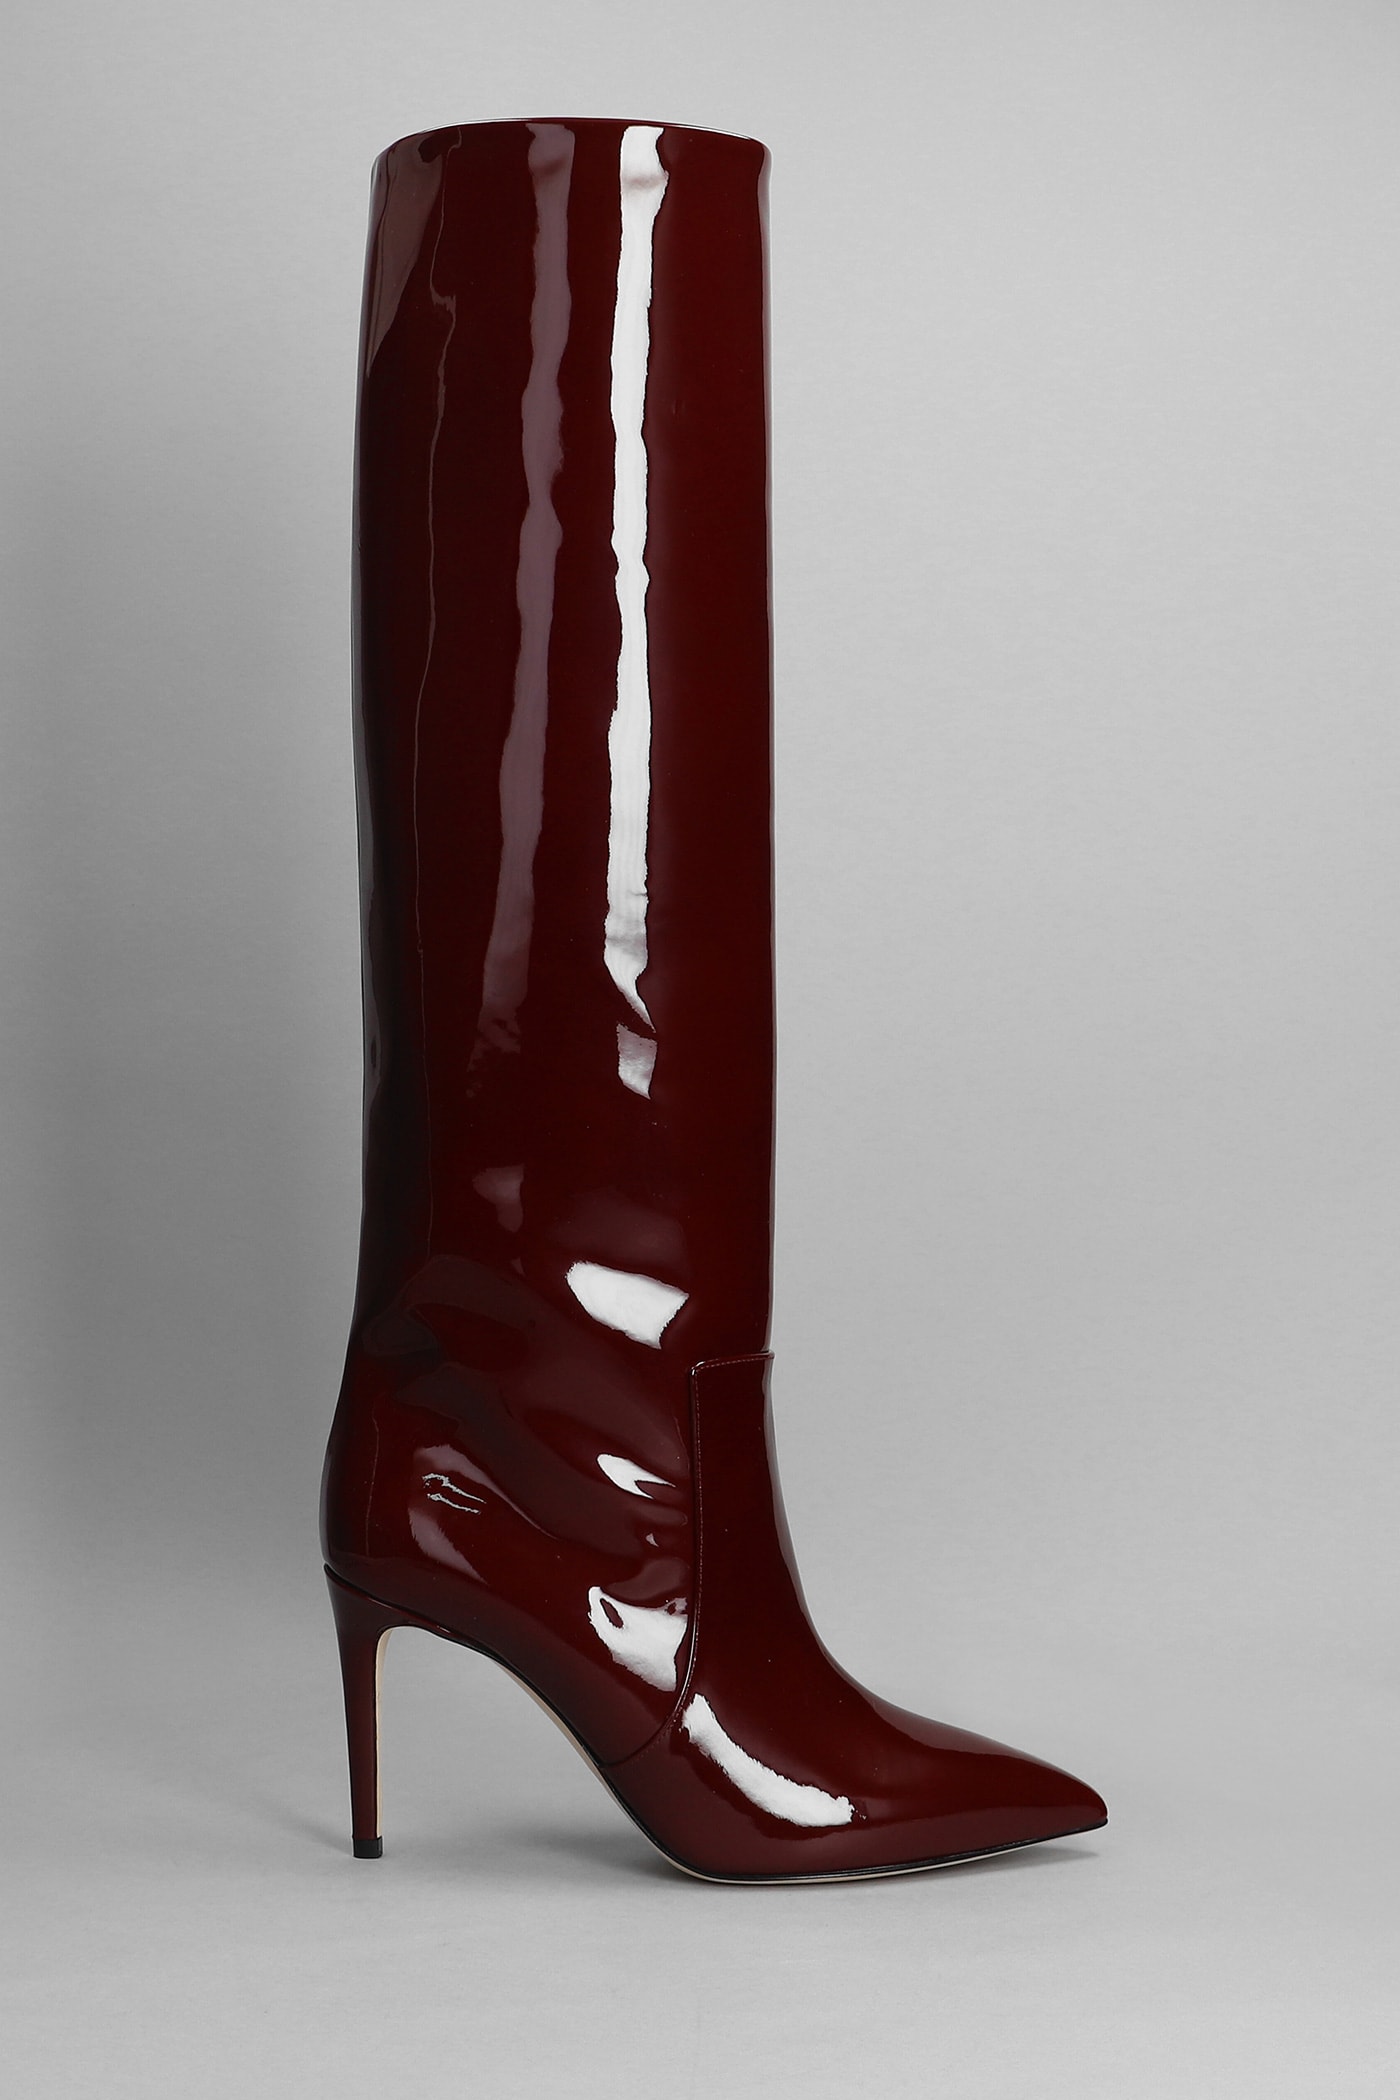 Paris Texas High Heels Boots In Bordeaux Pvc